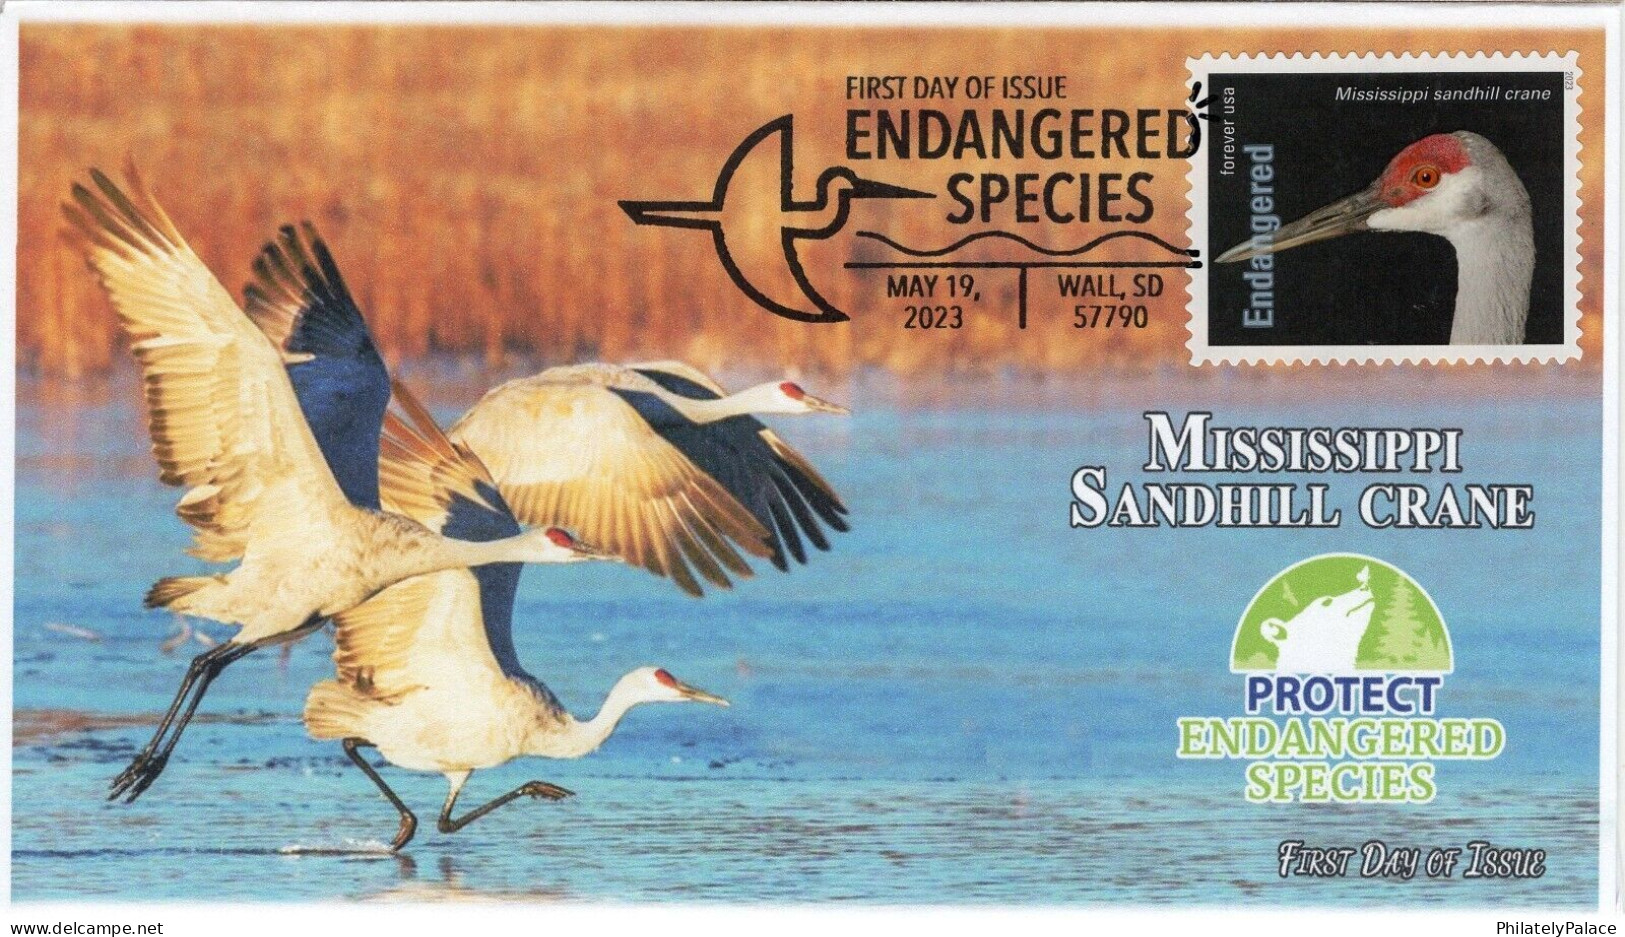 USA 2023 Mississippi Sandhill Crane, River, Endangered Species, Bird,Pictorial Postmark, FDC Cover (**) - Lettres & Documents